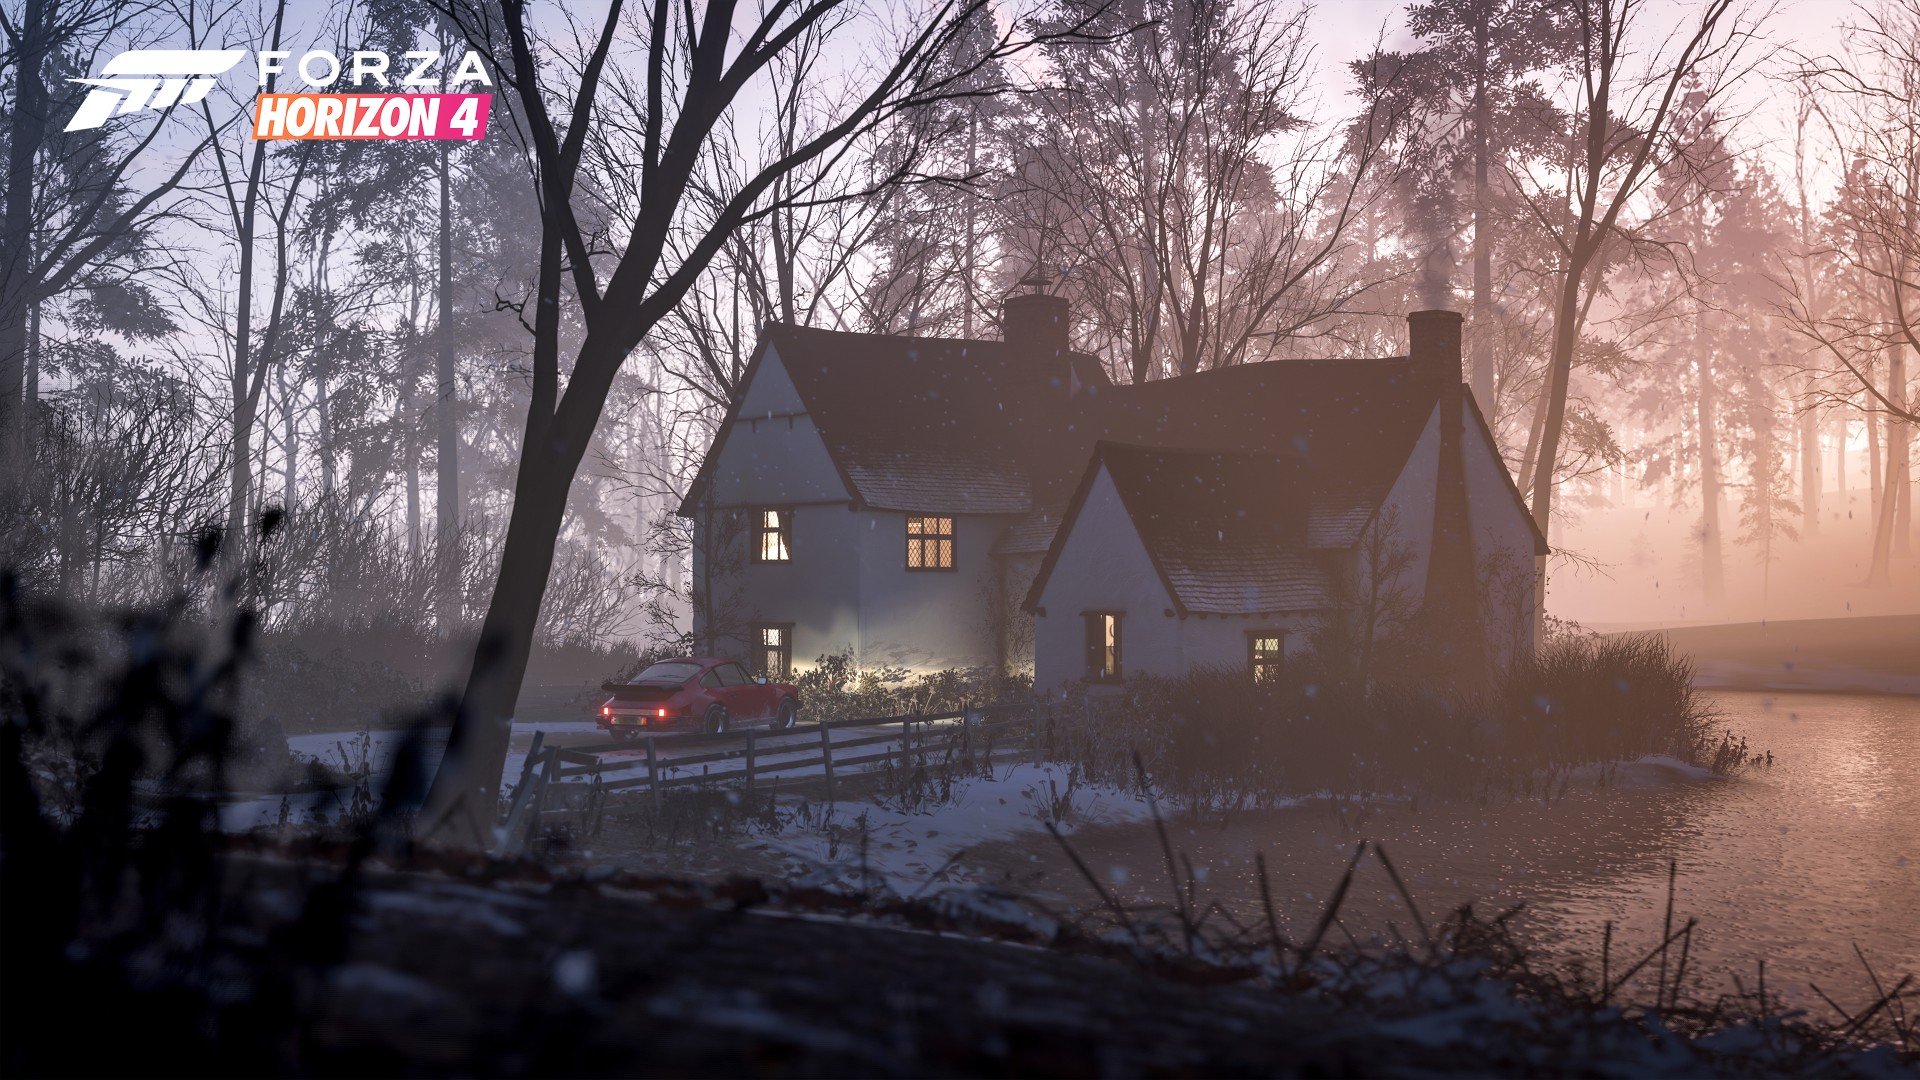 Forza Horizon 4 opens up a JPEG file Forza-Horizon-4_Winter-House-1.jpg